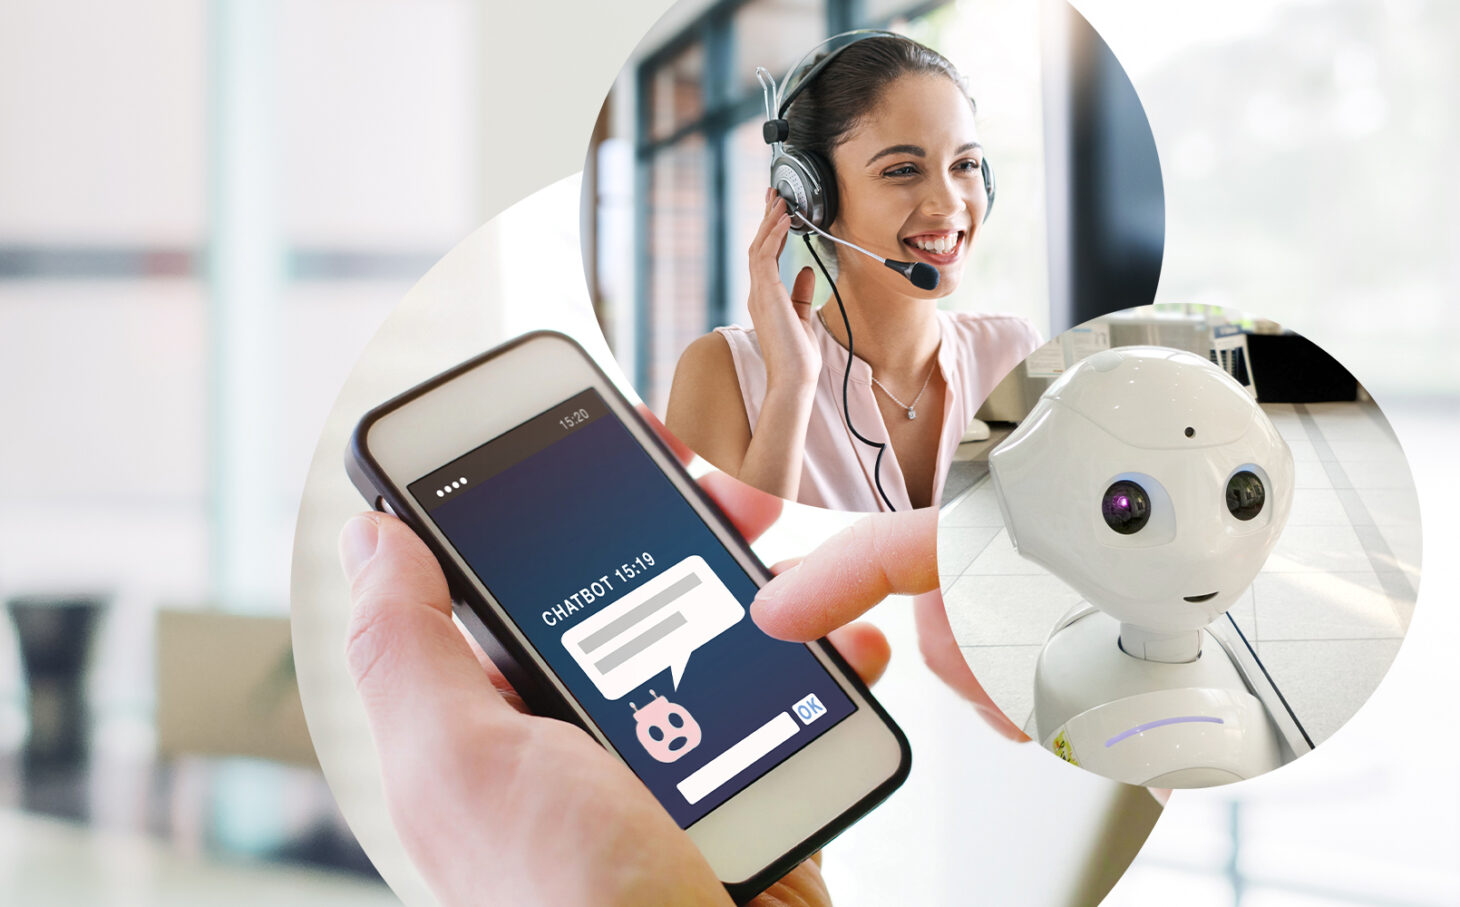 Robotic und Chatbots sowie Conversational AI